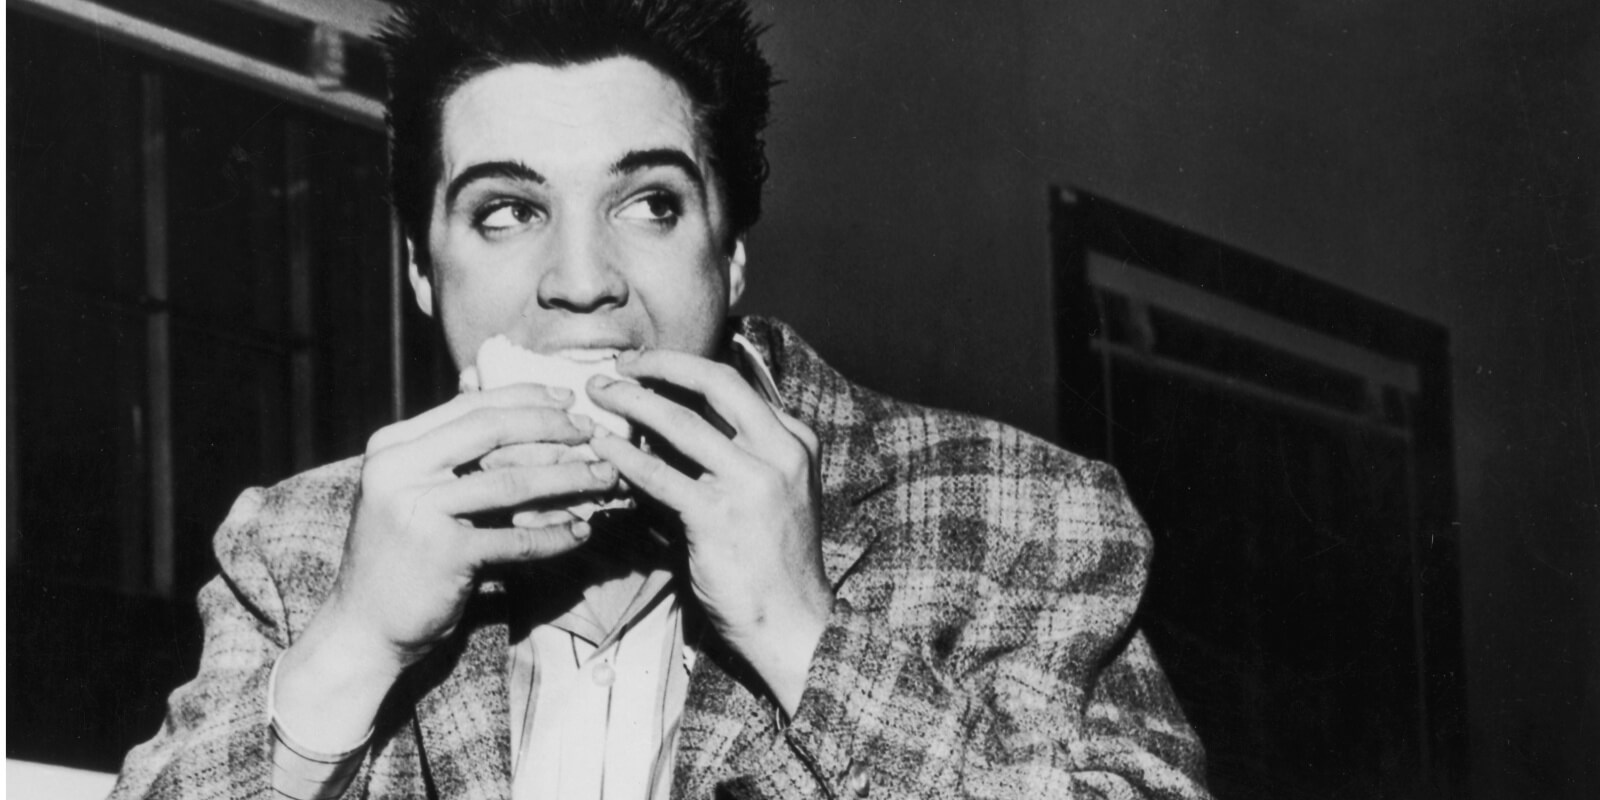 Elvis Presley eating a sandwich in 1958.